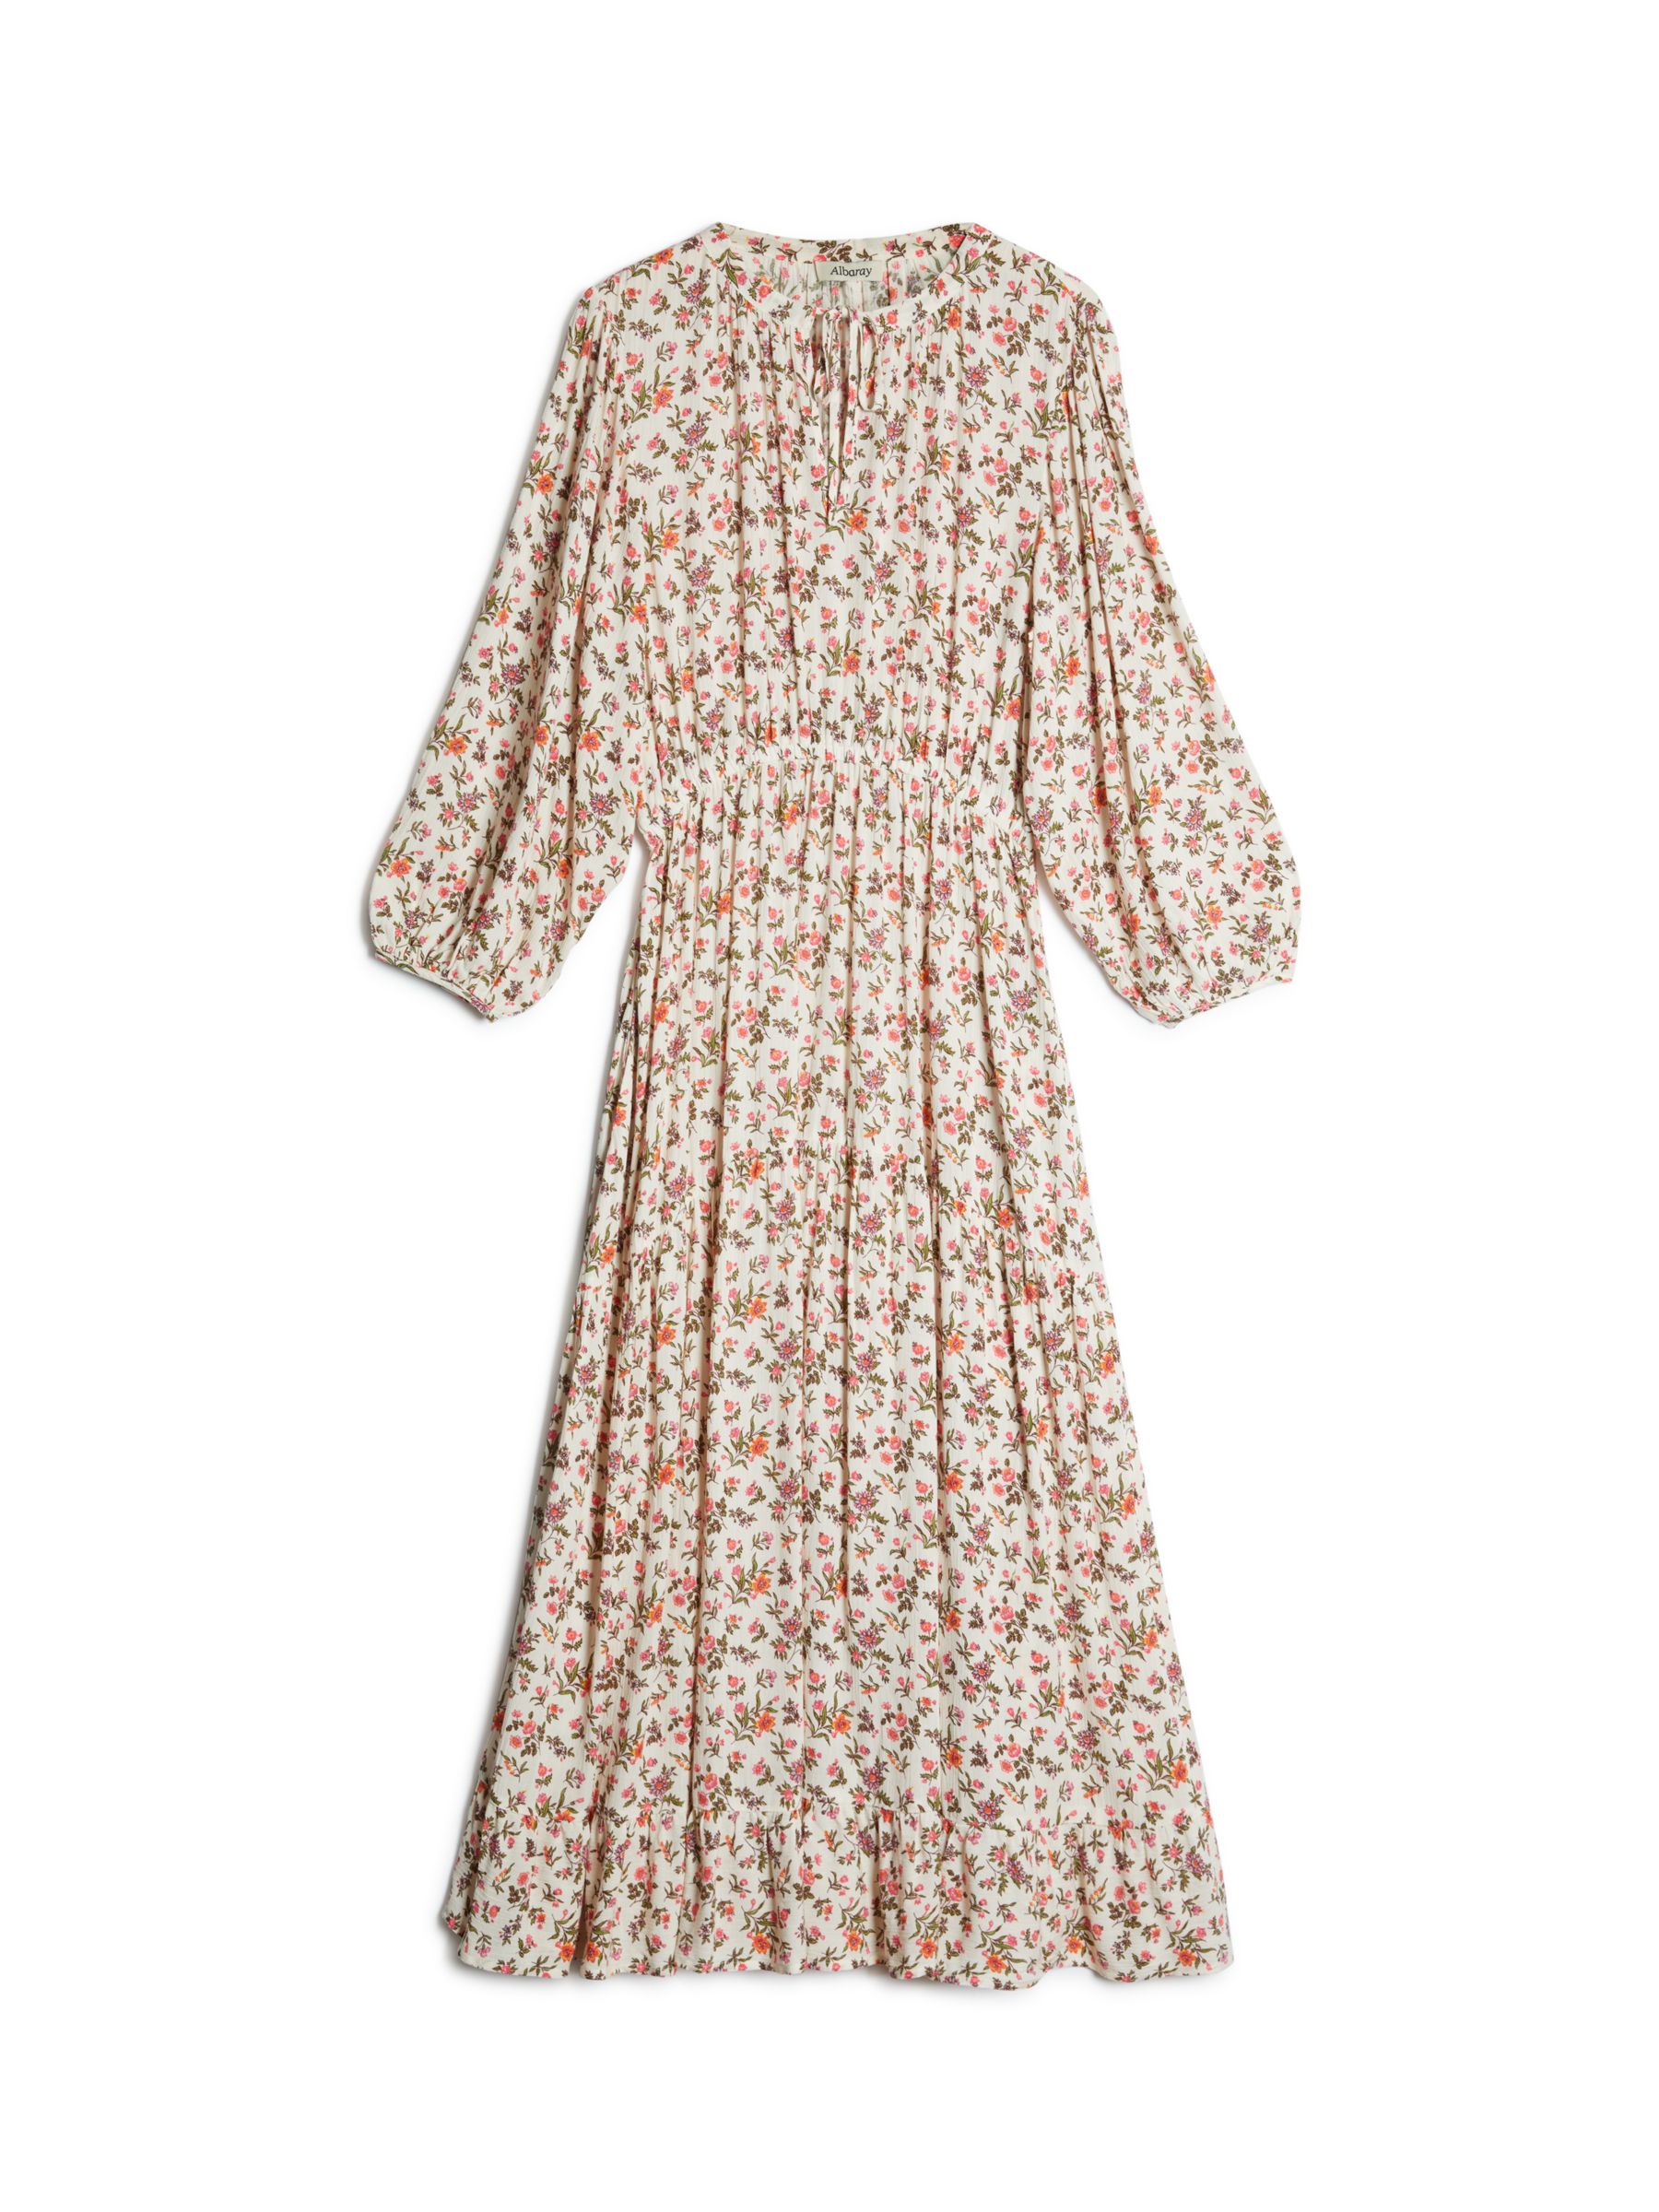 Albaray Prairie Floral Print Dress, Cream/Multi at John Lewis & Partners